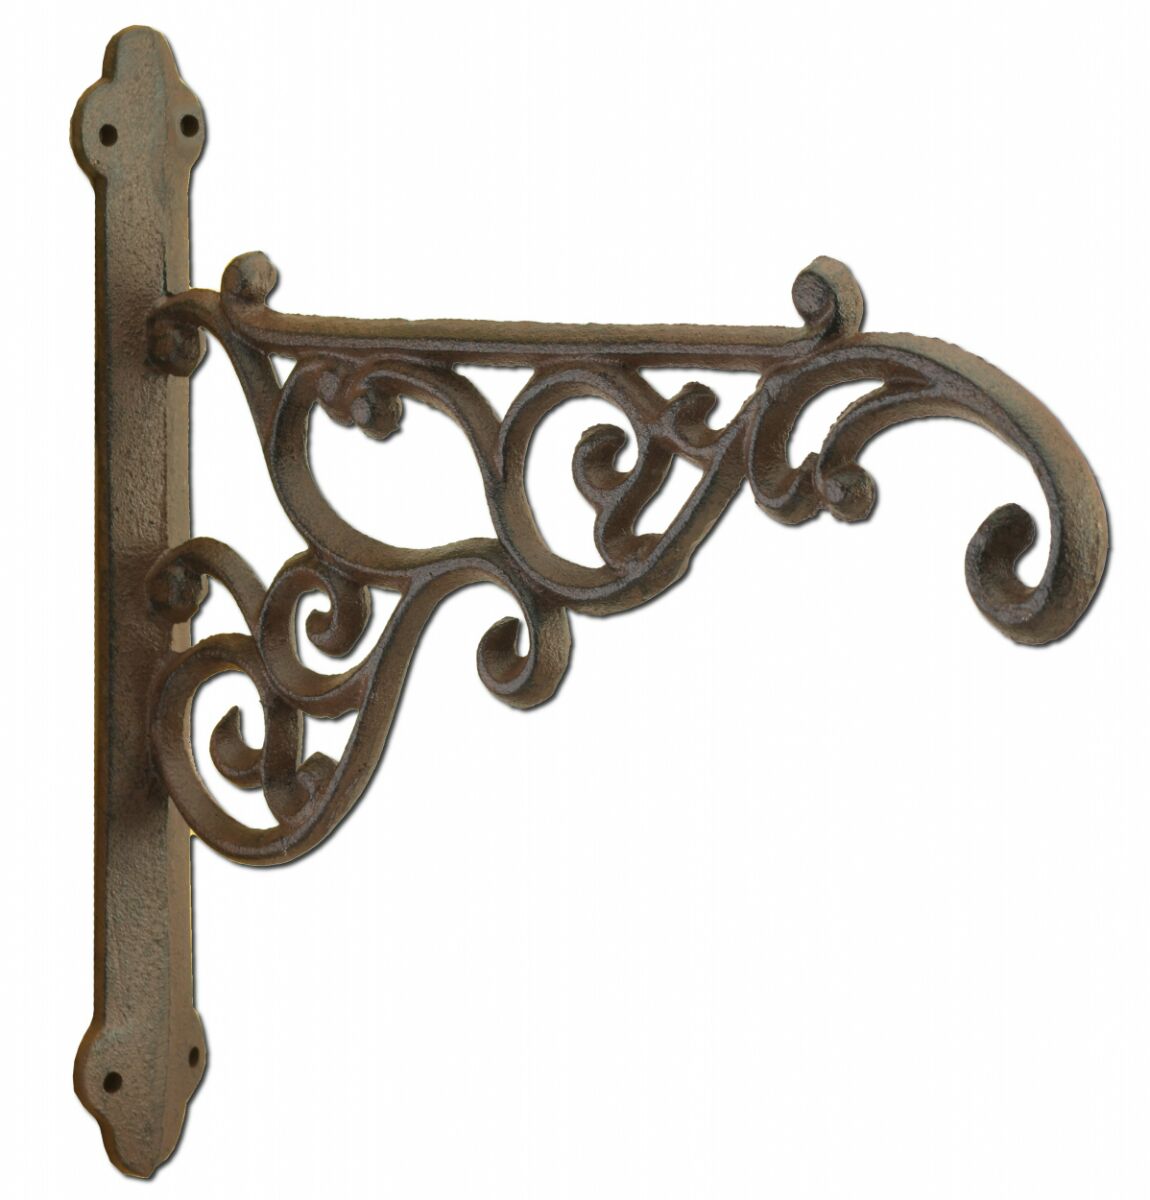 Decorative Ornate Victorian Cast Iron Plant Hanger Hook - Rust Brown 8.375 Long